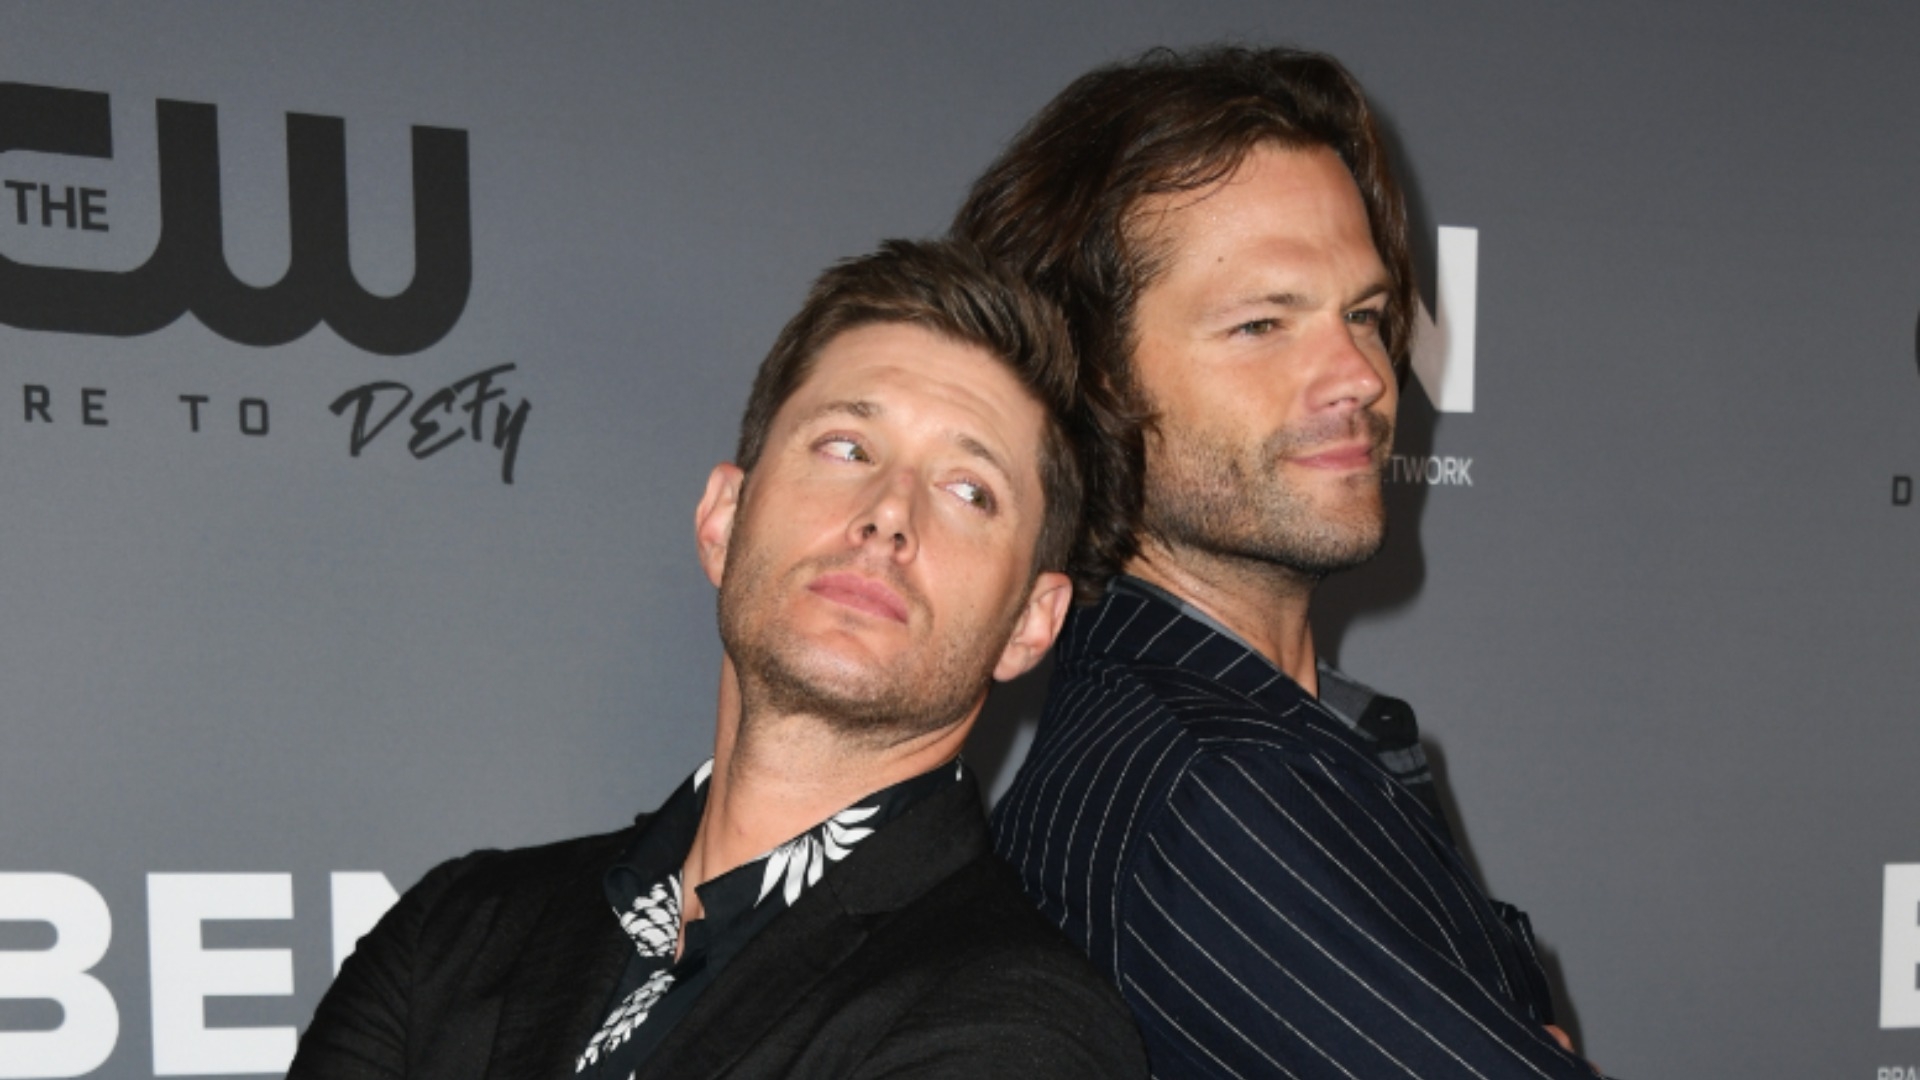 The Boys‘ Jensen Ackles and showrunner Eric Kripke “would love” a Jared Padalecki cameo